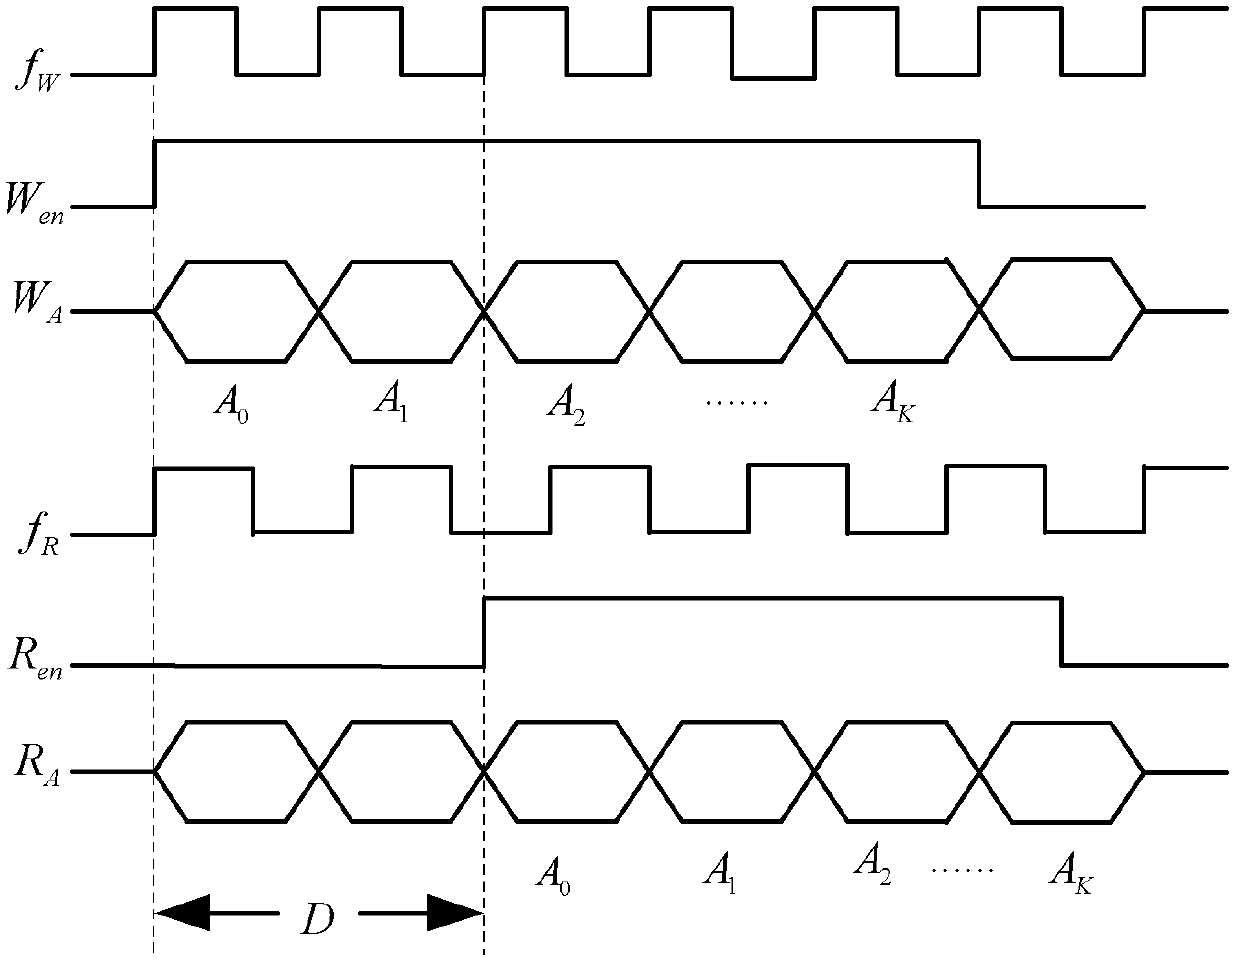 Processing method of heterodyne analog dynamic object signal